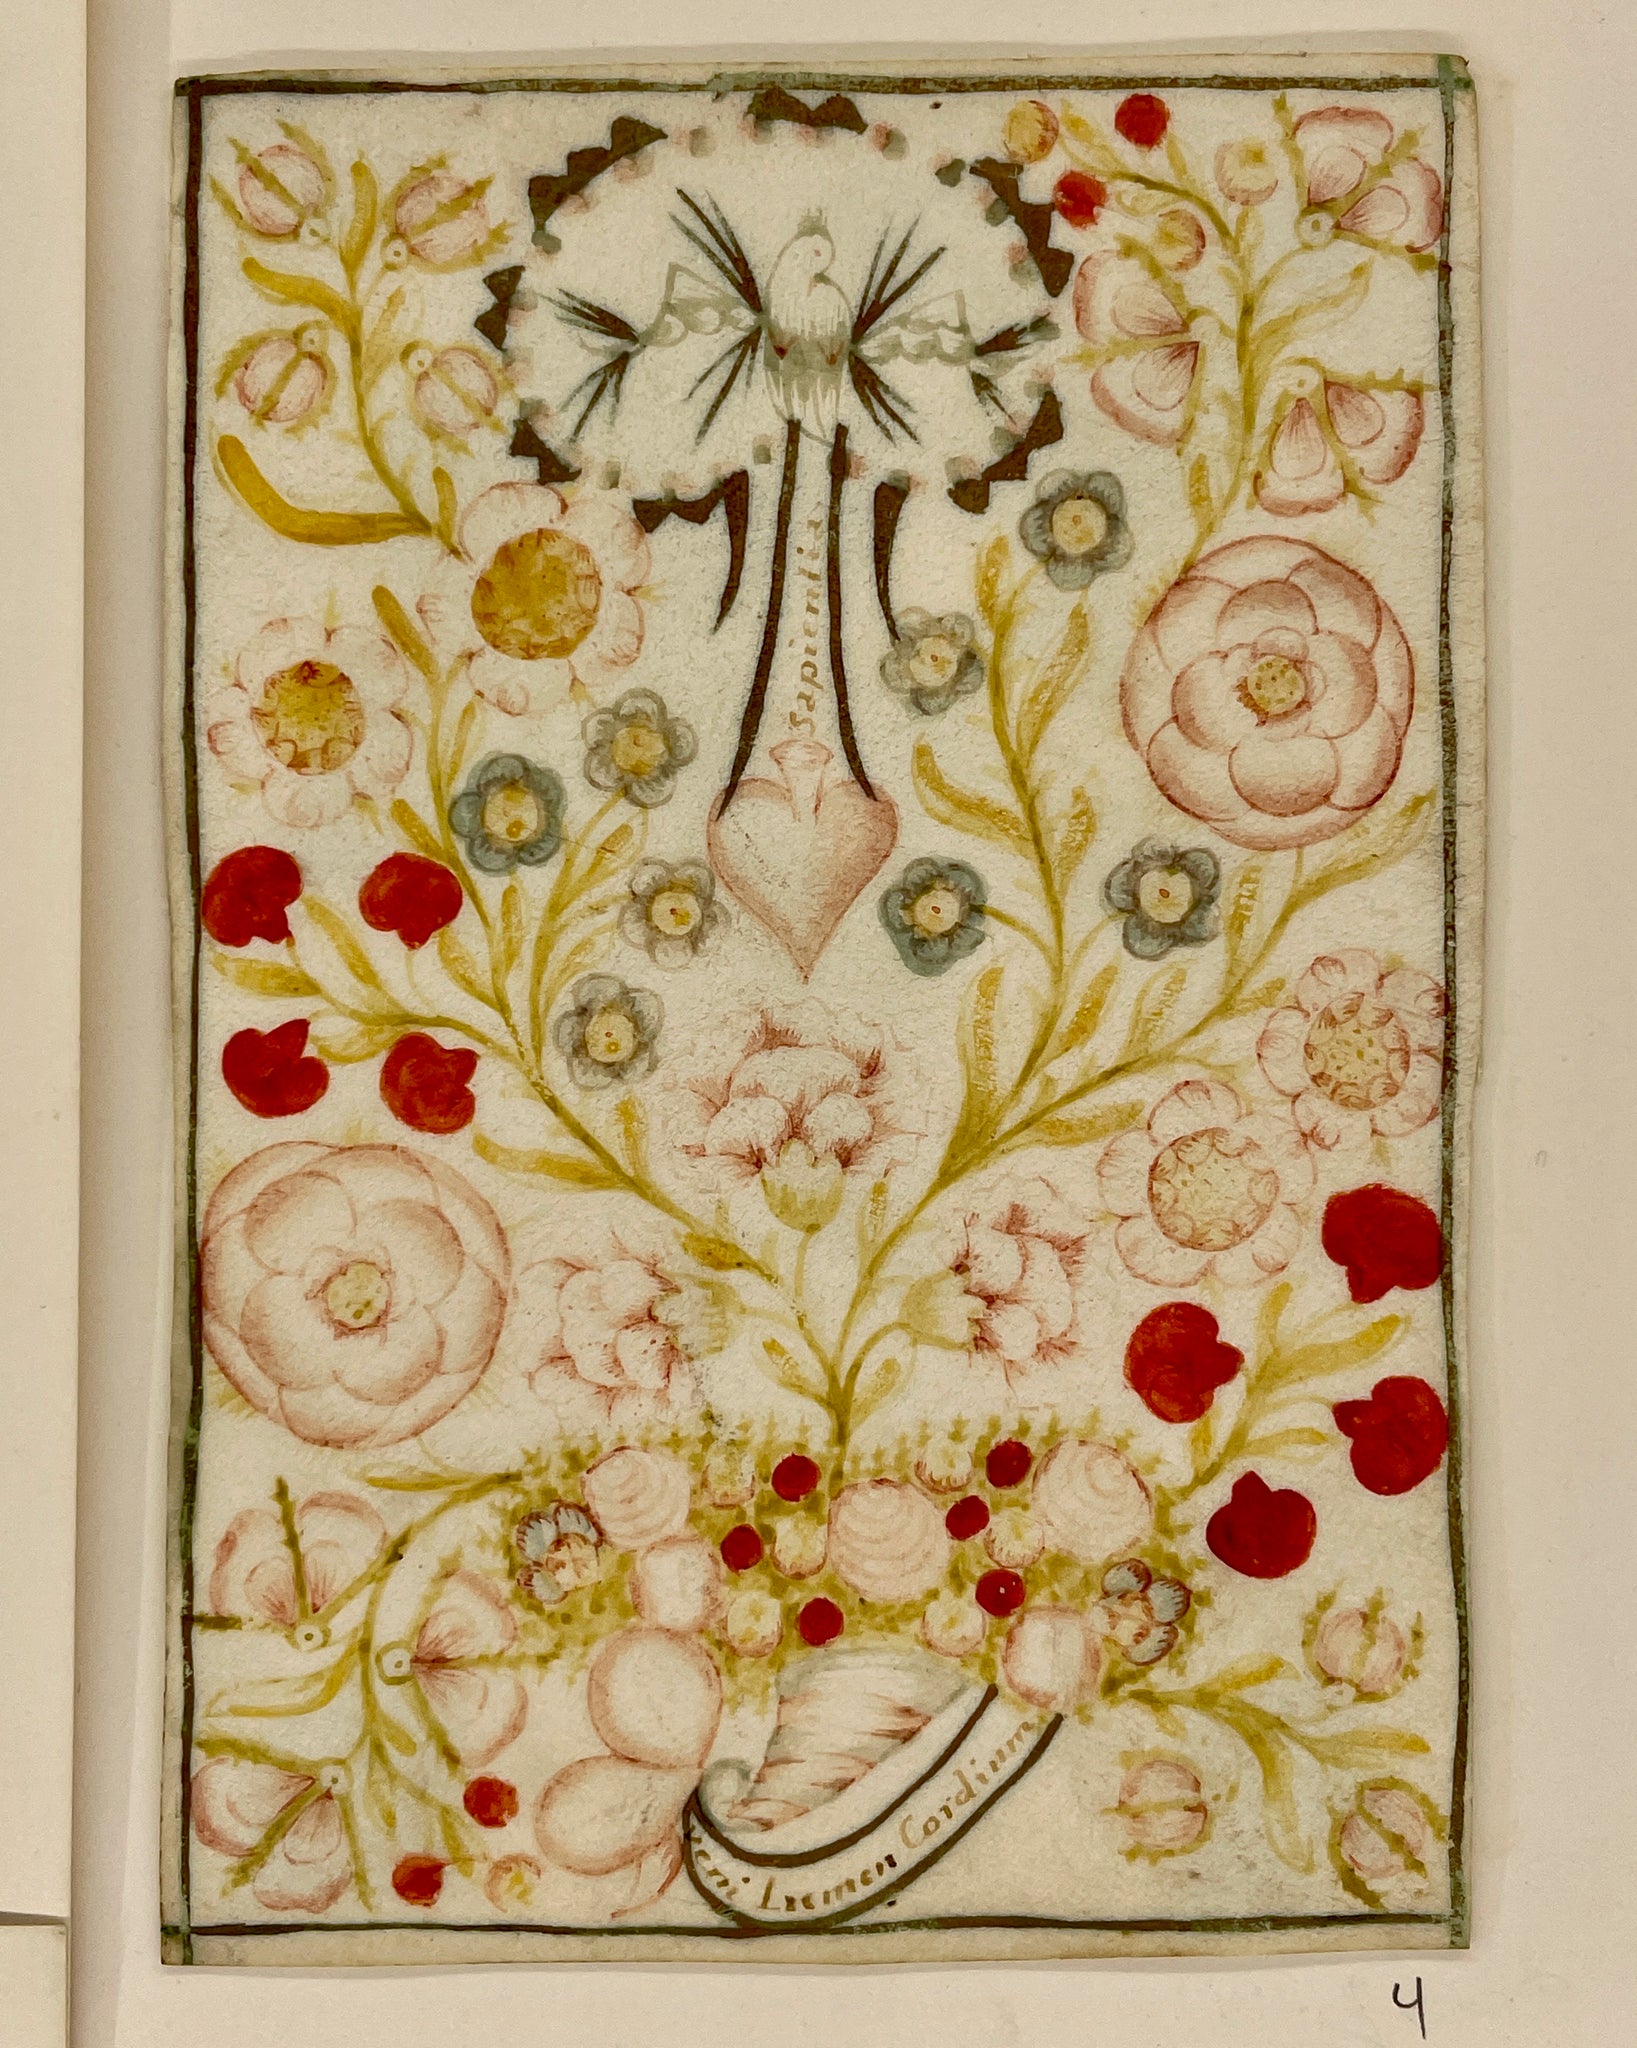 #4 - Handpainted Devotional Prayer Card, ca. 1820